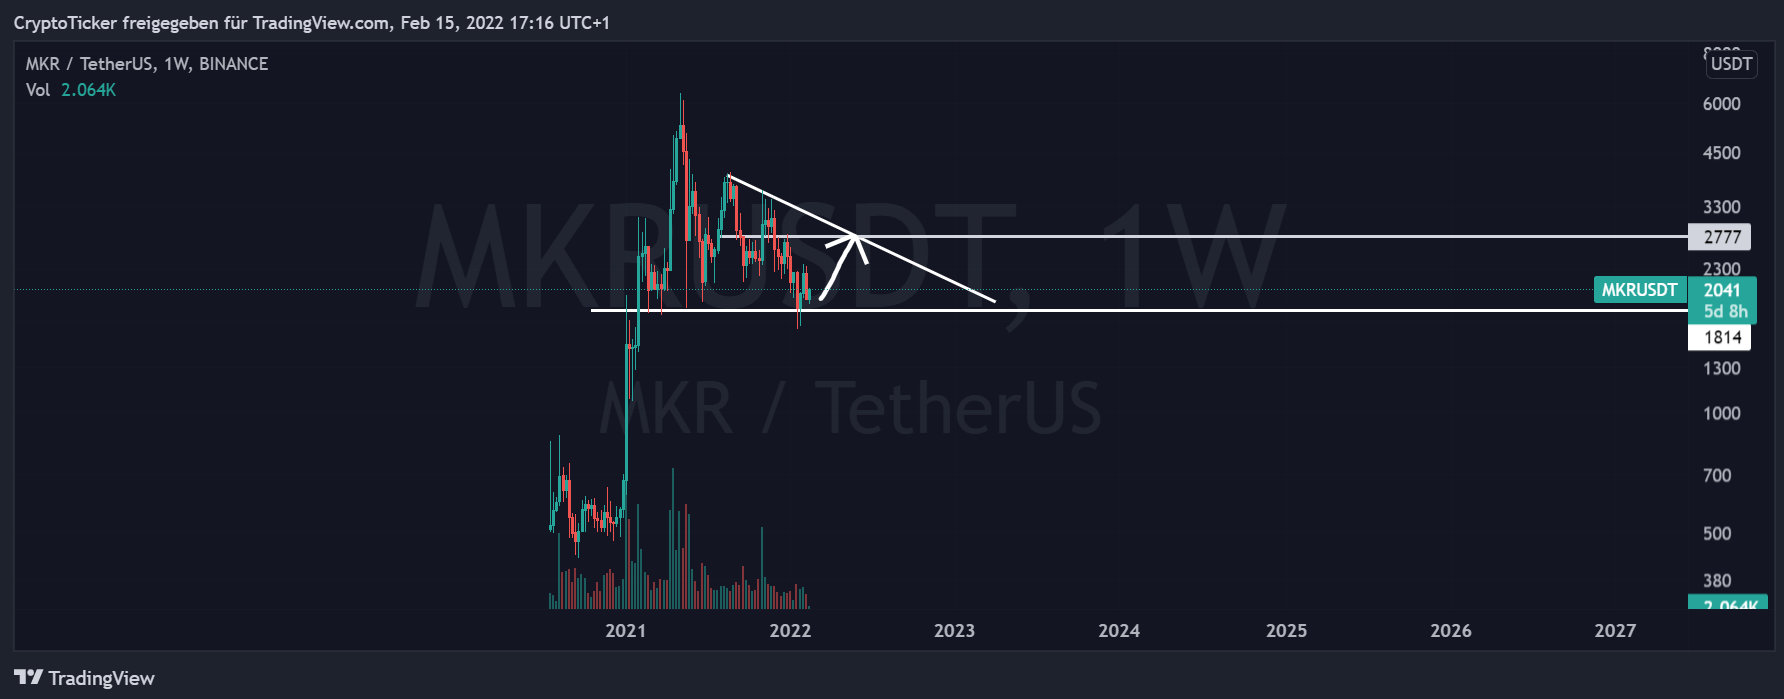 MKR/USDT 1-week chart showing the descending triangle of Maker price